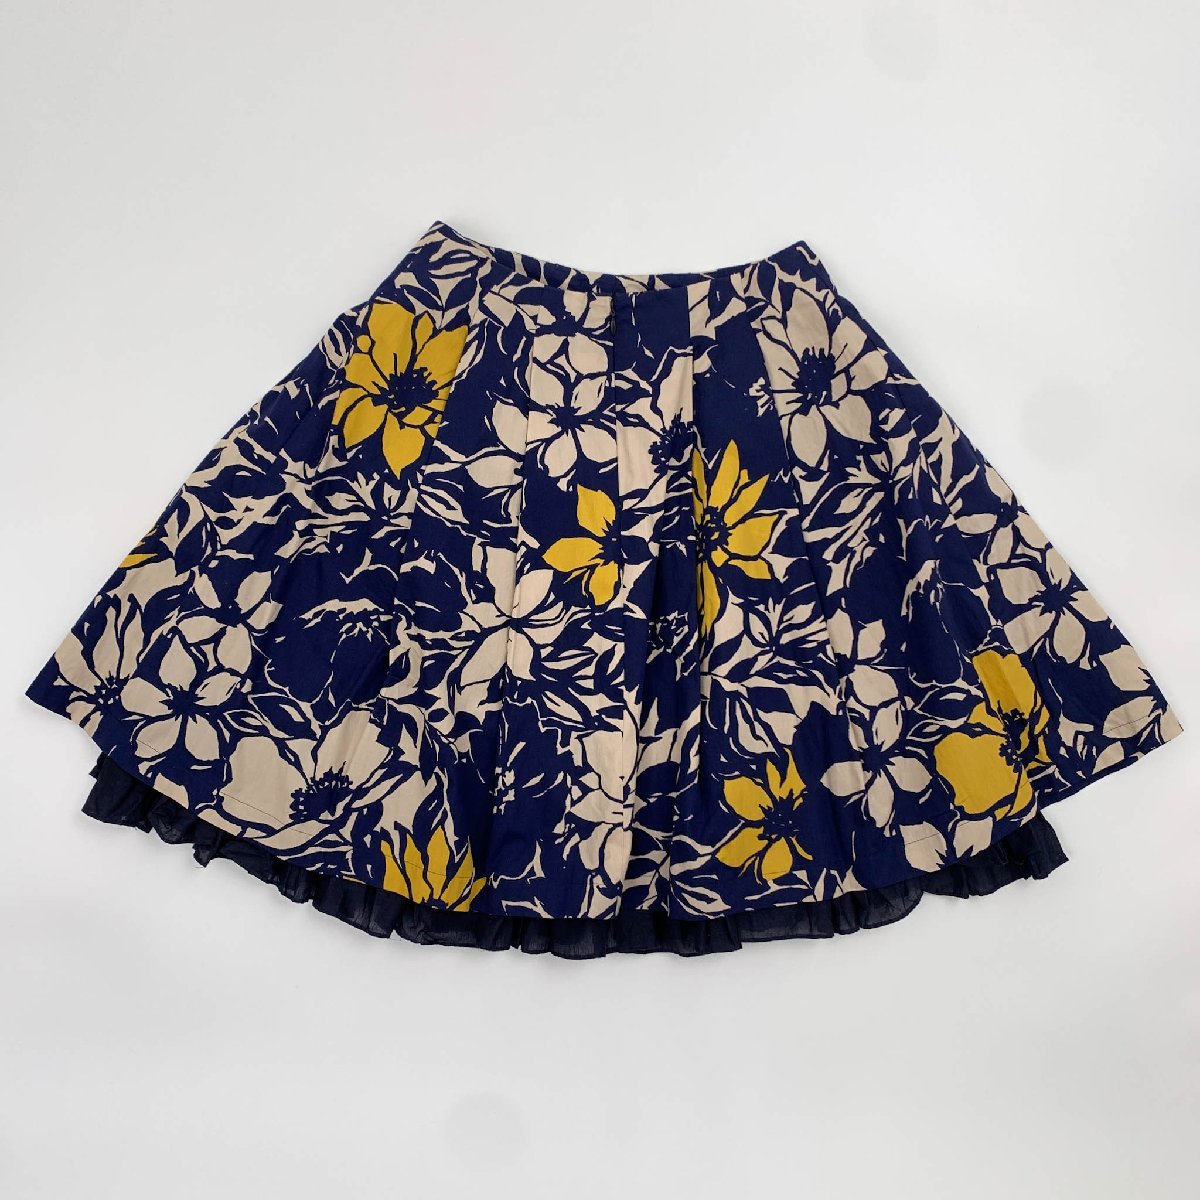 M'S GRACY エムズグレイシー フレア スカート ミニスカート フリル 総柄 花柄 サイズ 38 ブルー系 レディース 日本製 スカート 